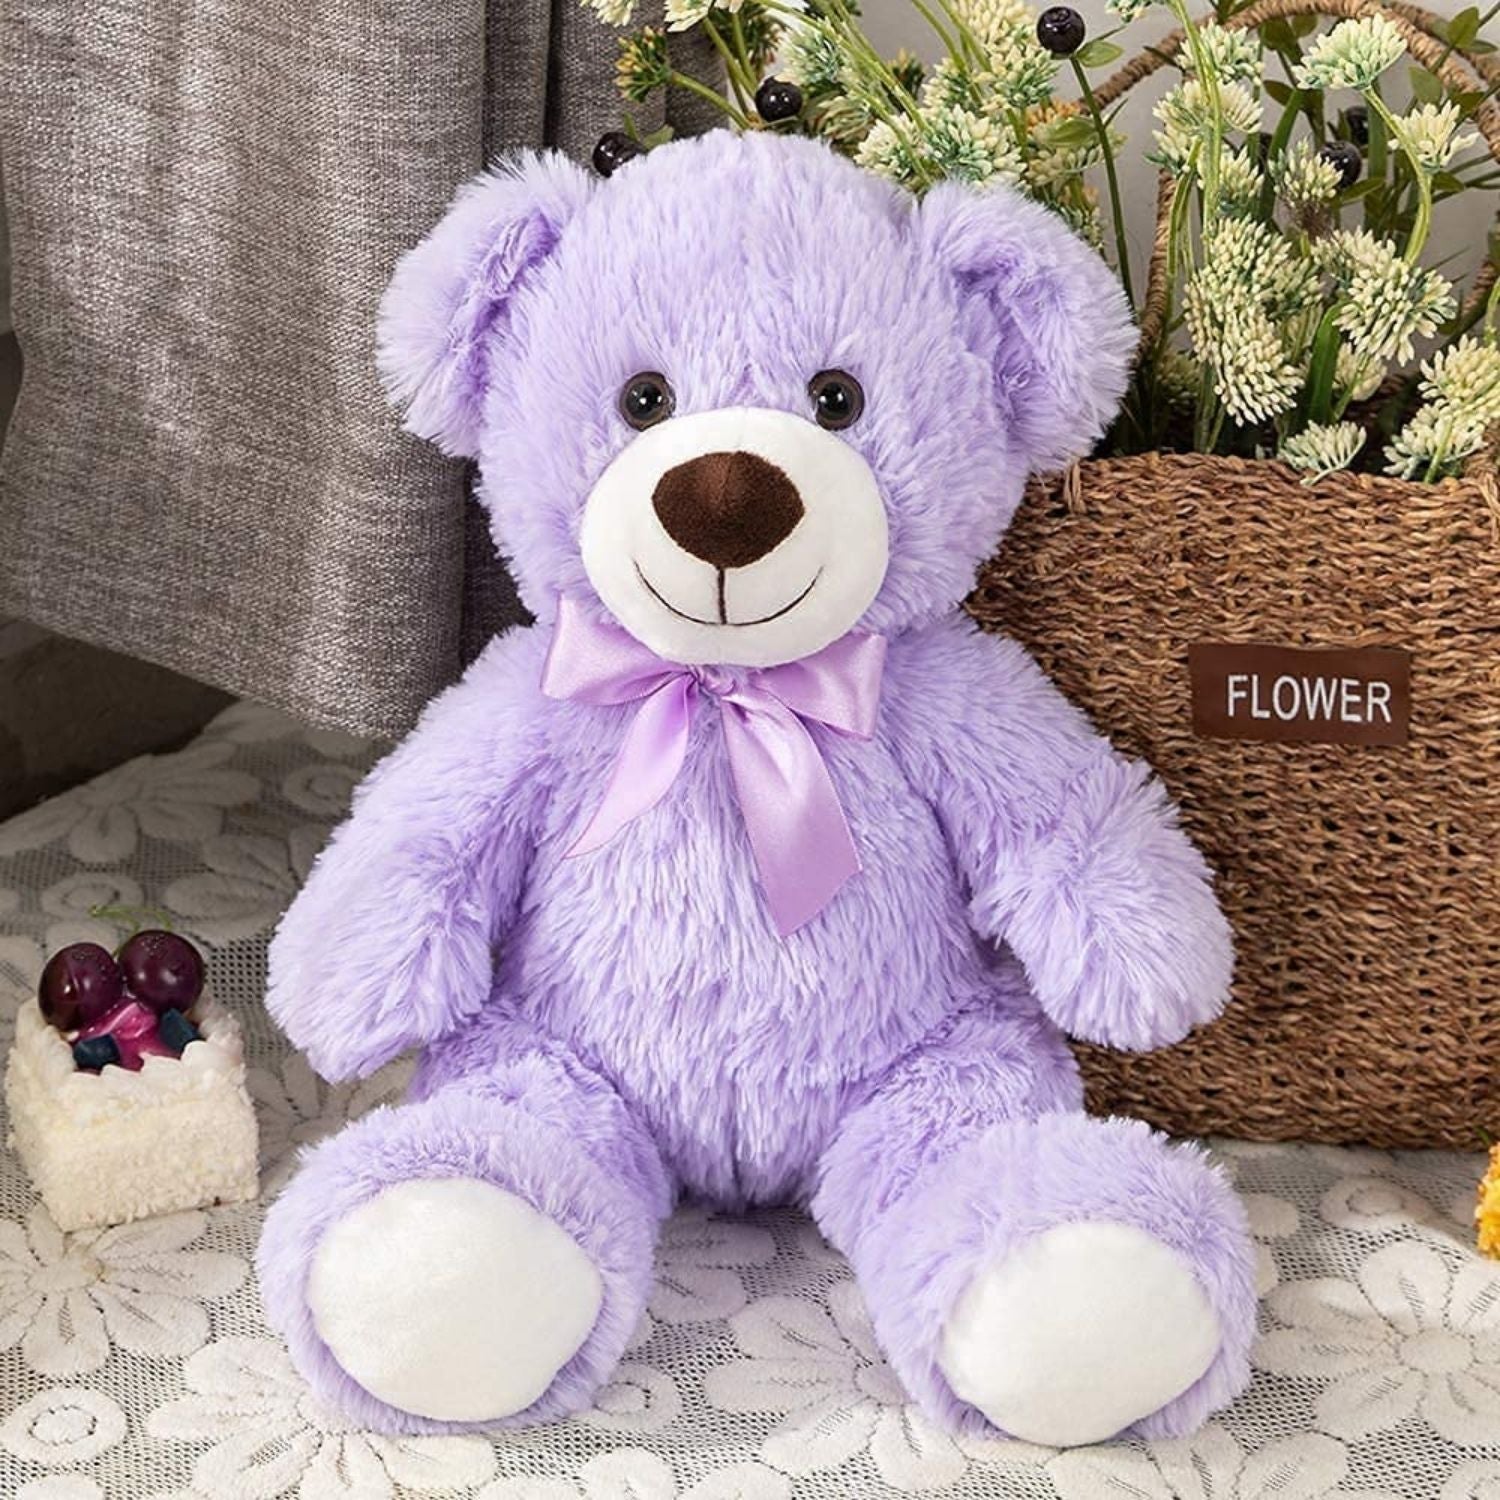 3-Pack Teddy Bears, Beige/Pink/Purple, 13.8 Inches